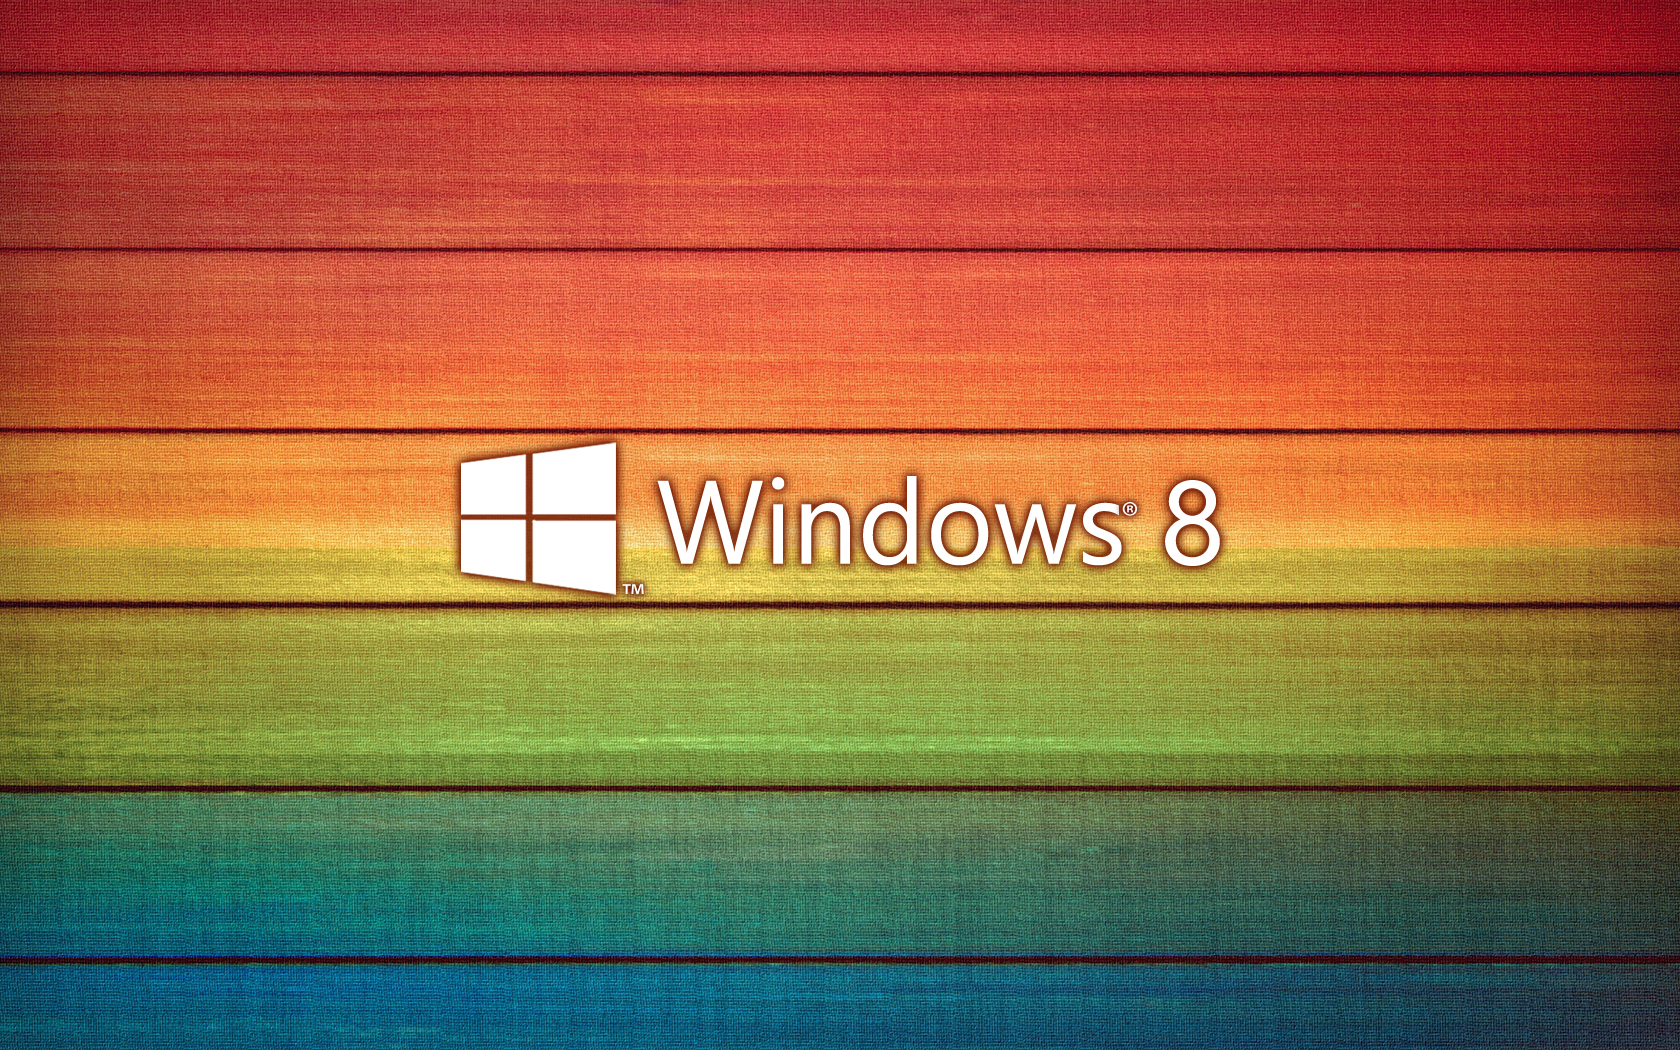 Colorful Windows 8 Wallpaper Hd For Desktop Wallpaper